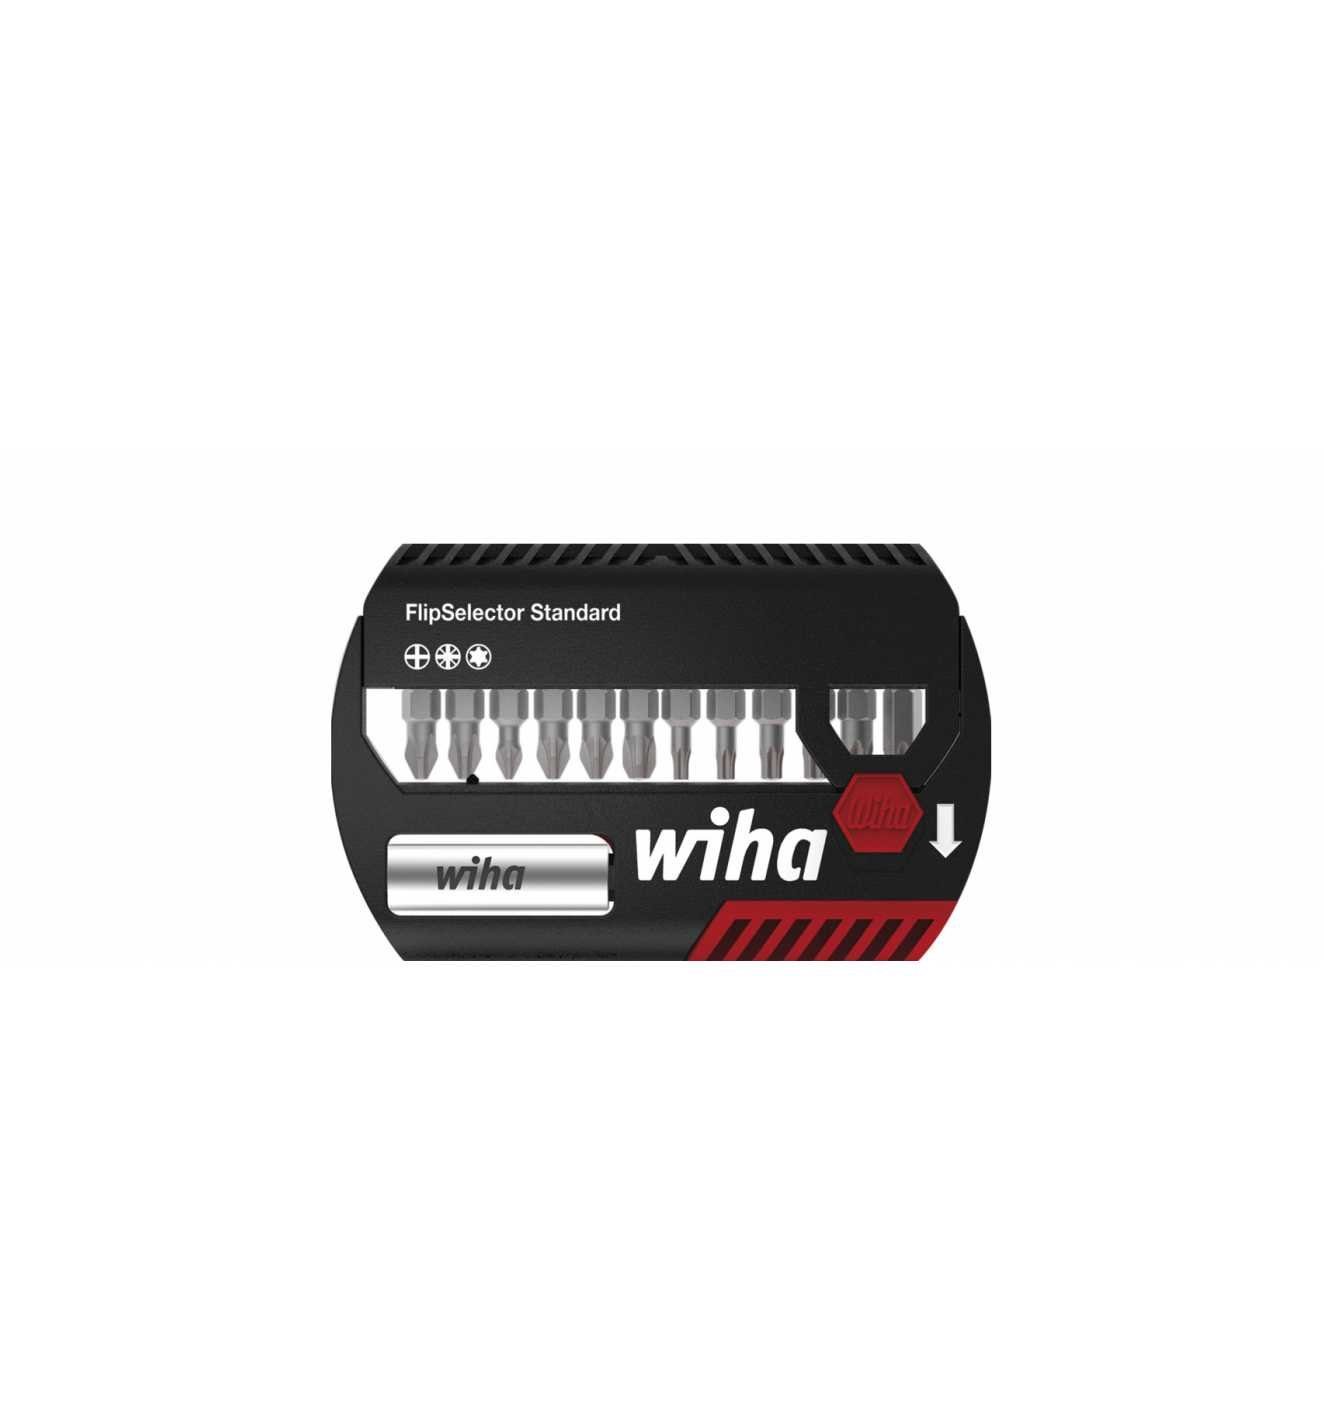 Wiha Bit-Set Bit Set FlipSelector Standard 25 mm, Phillips, Pozidriv, TORX 14-tlg. 1/4" C6,3 (39040)